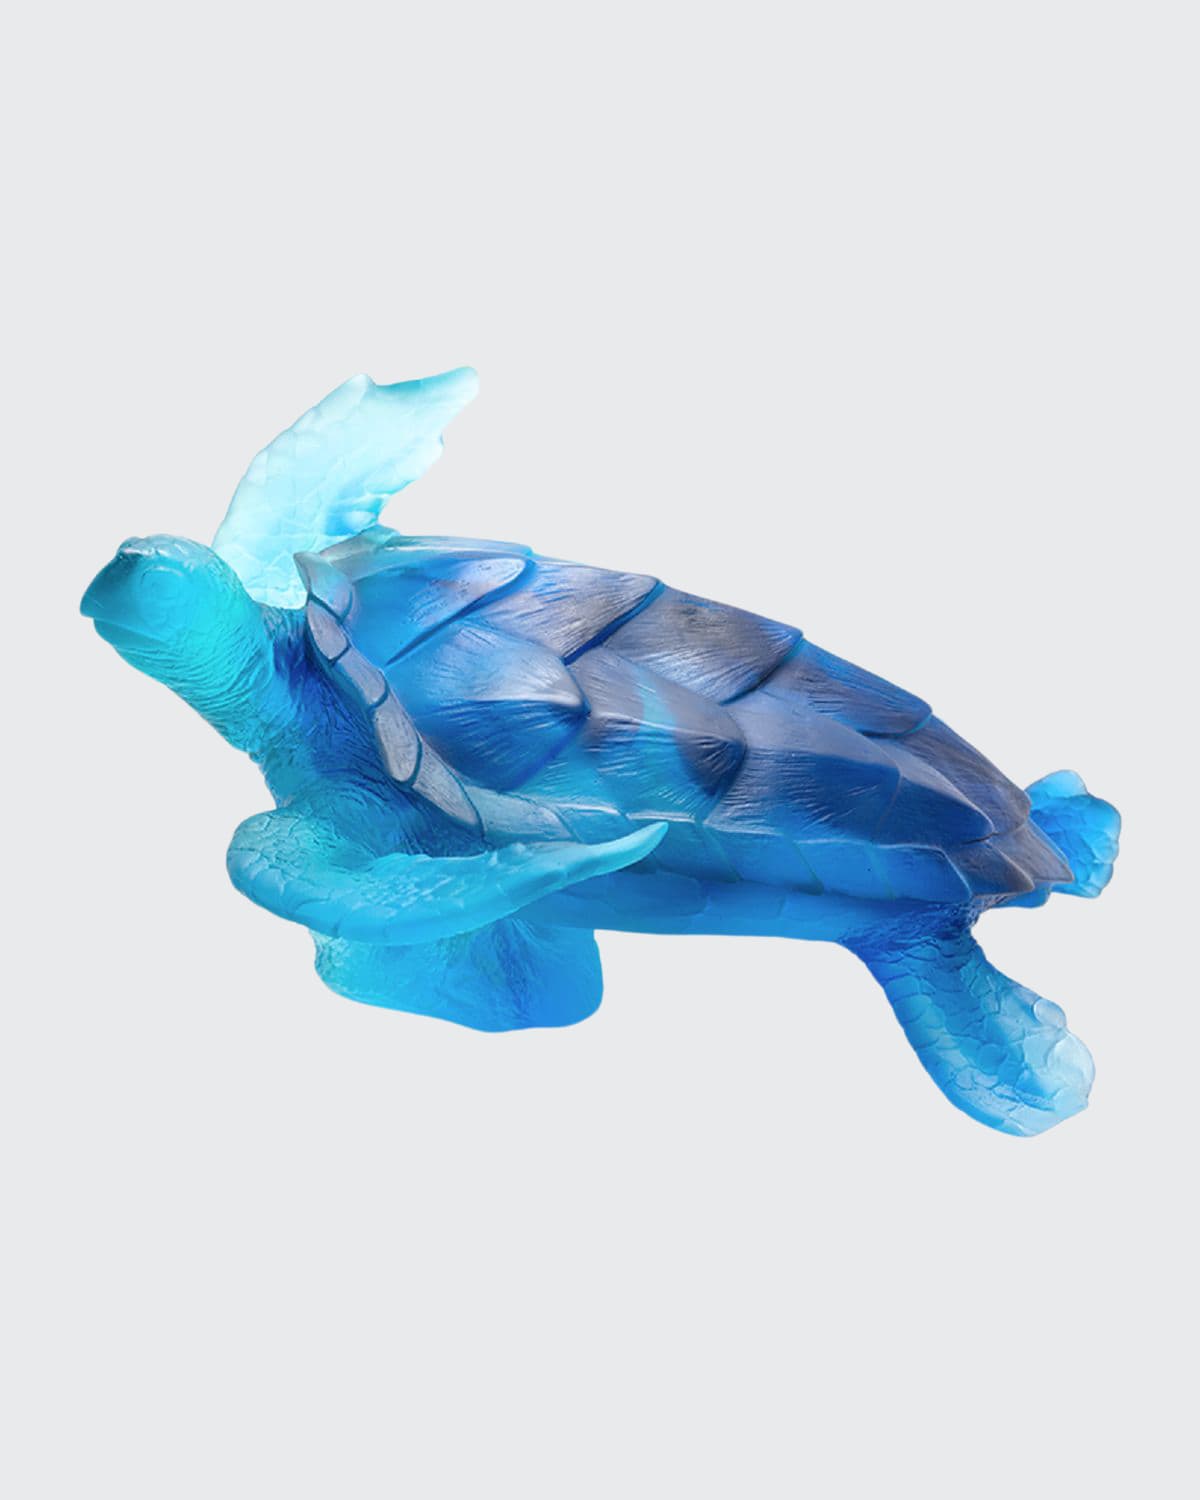 Shop Daum Coral Sea Large Blue Sea Turtle